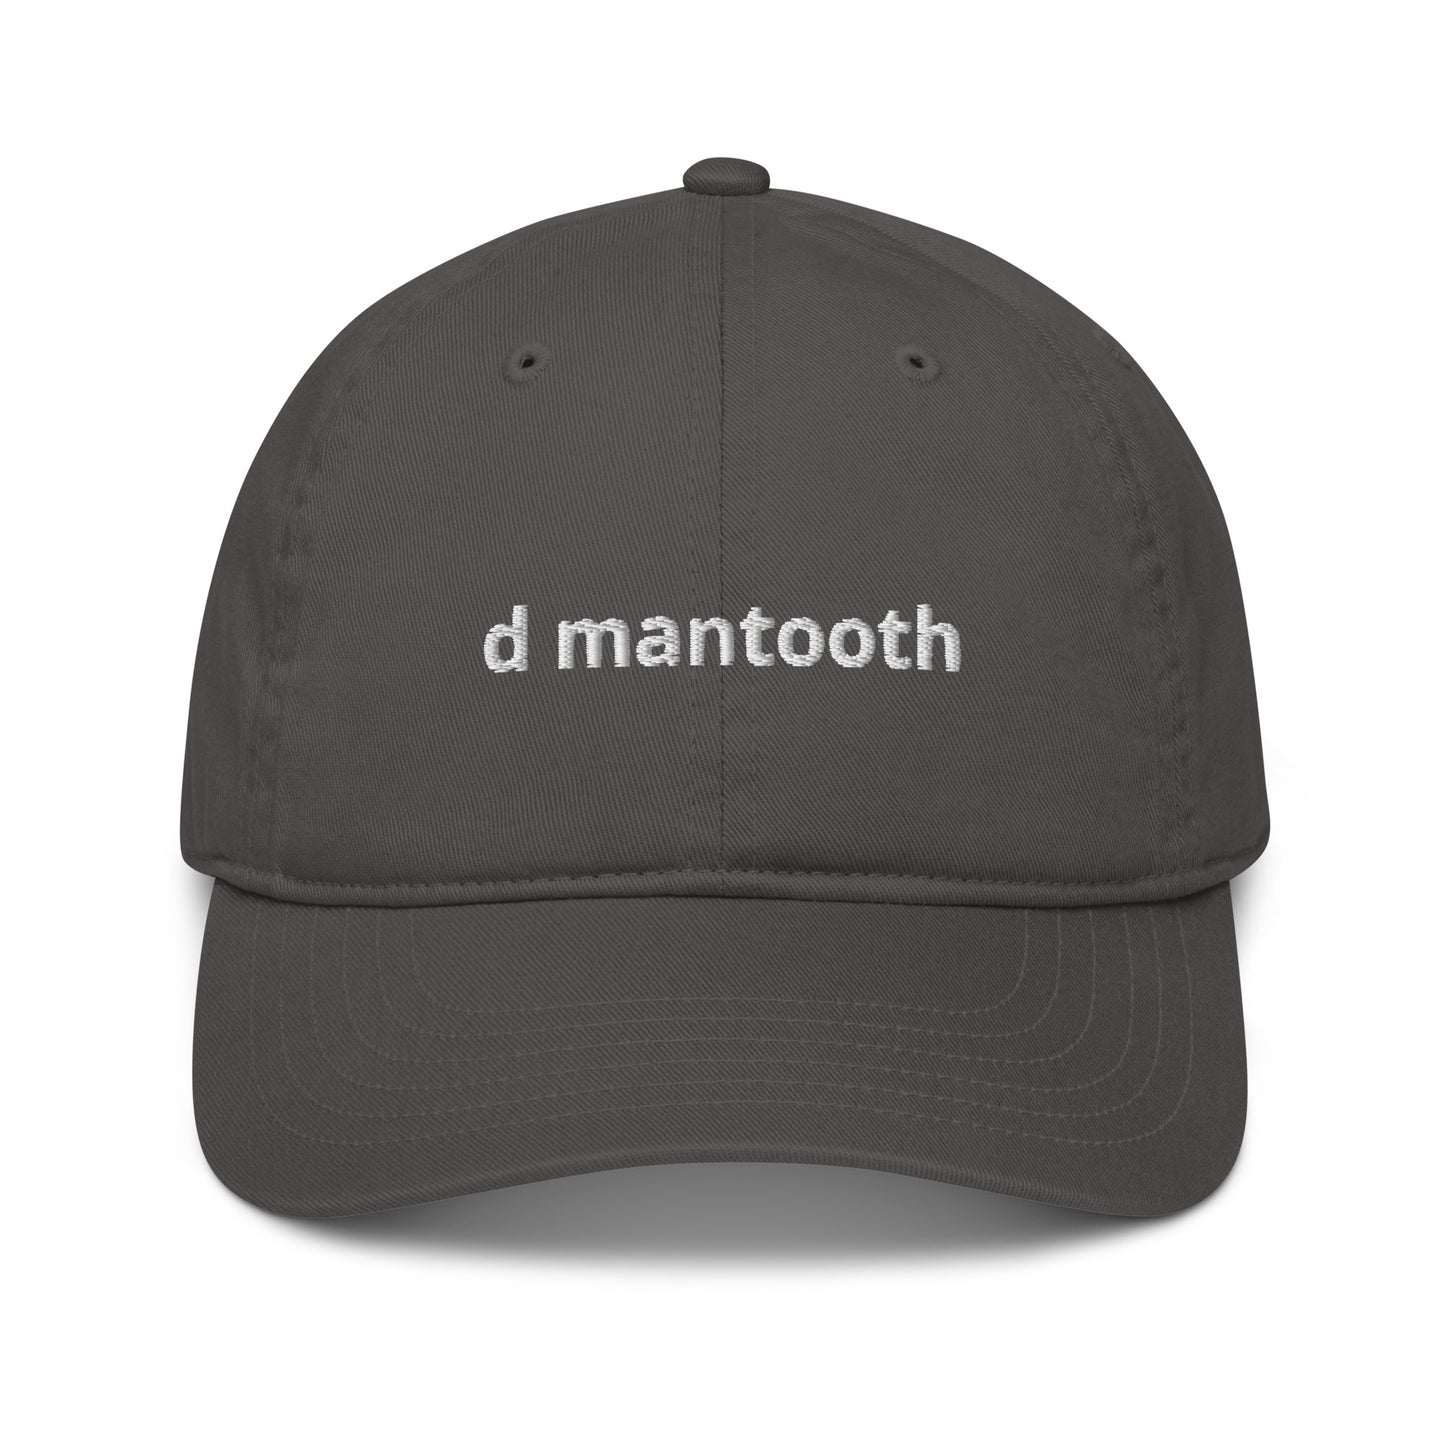 d mantooth